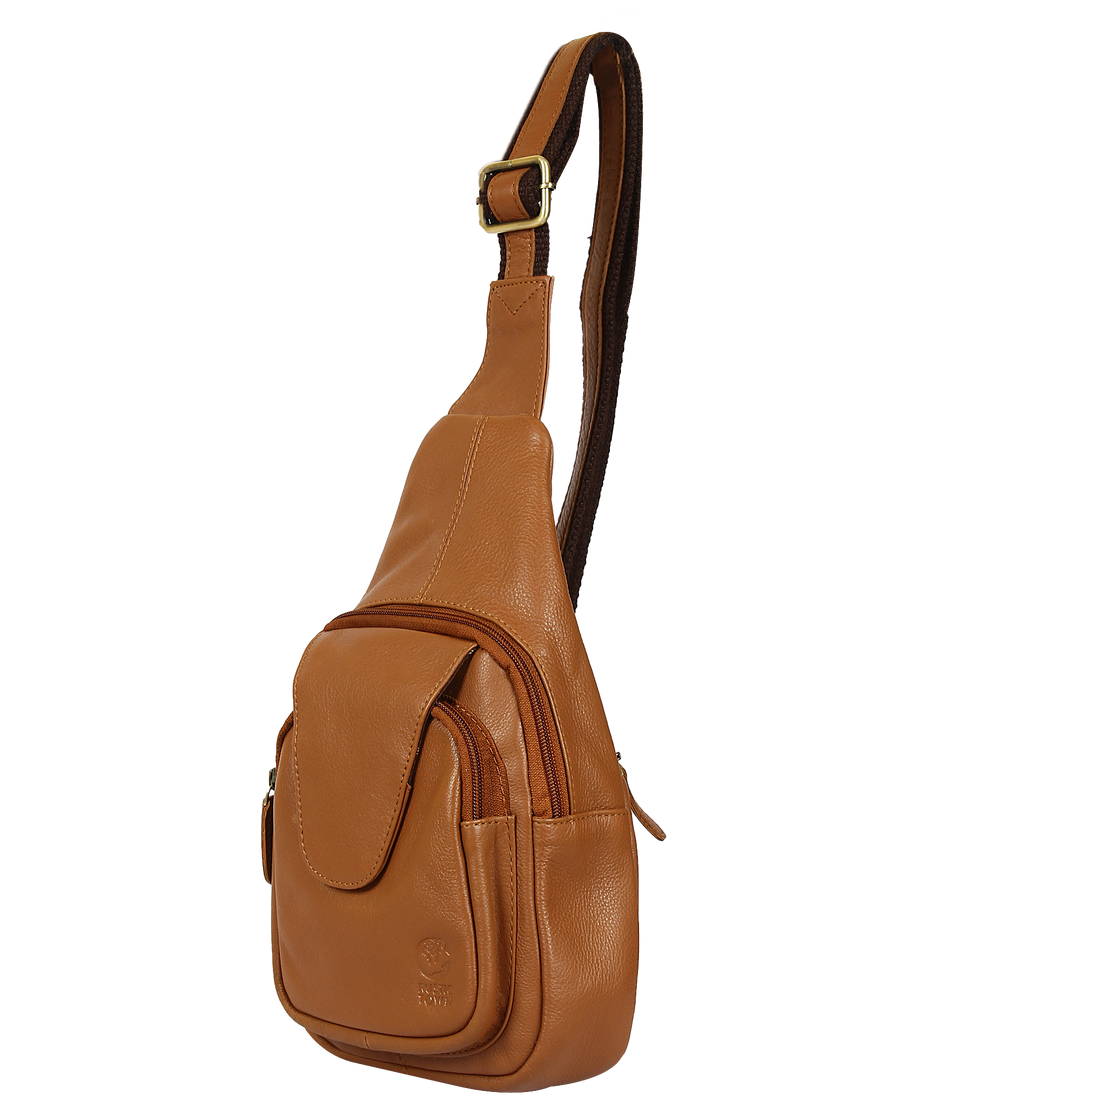 Details more than 71 leather sling bag - esthdonghoadian